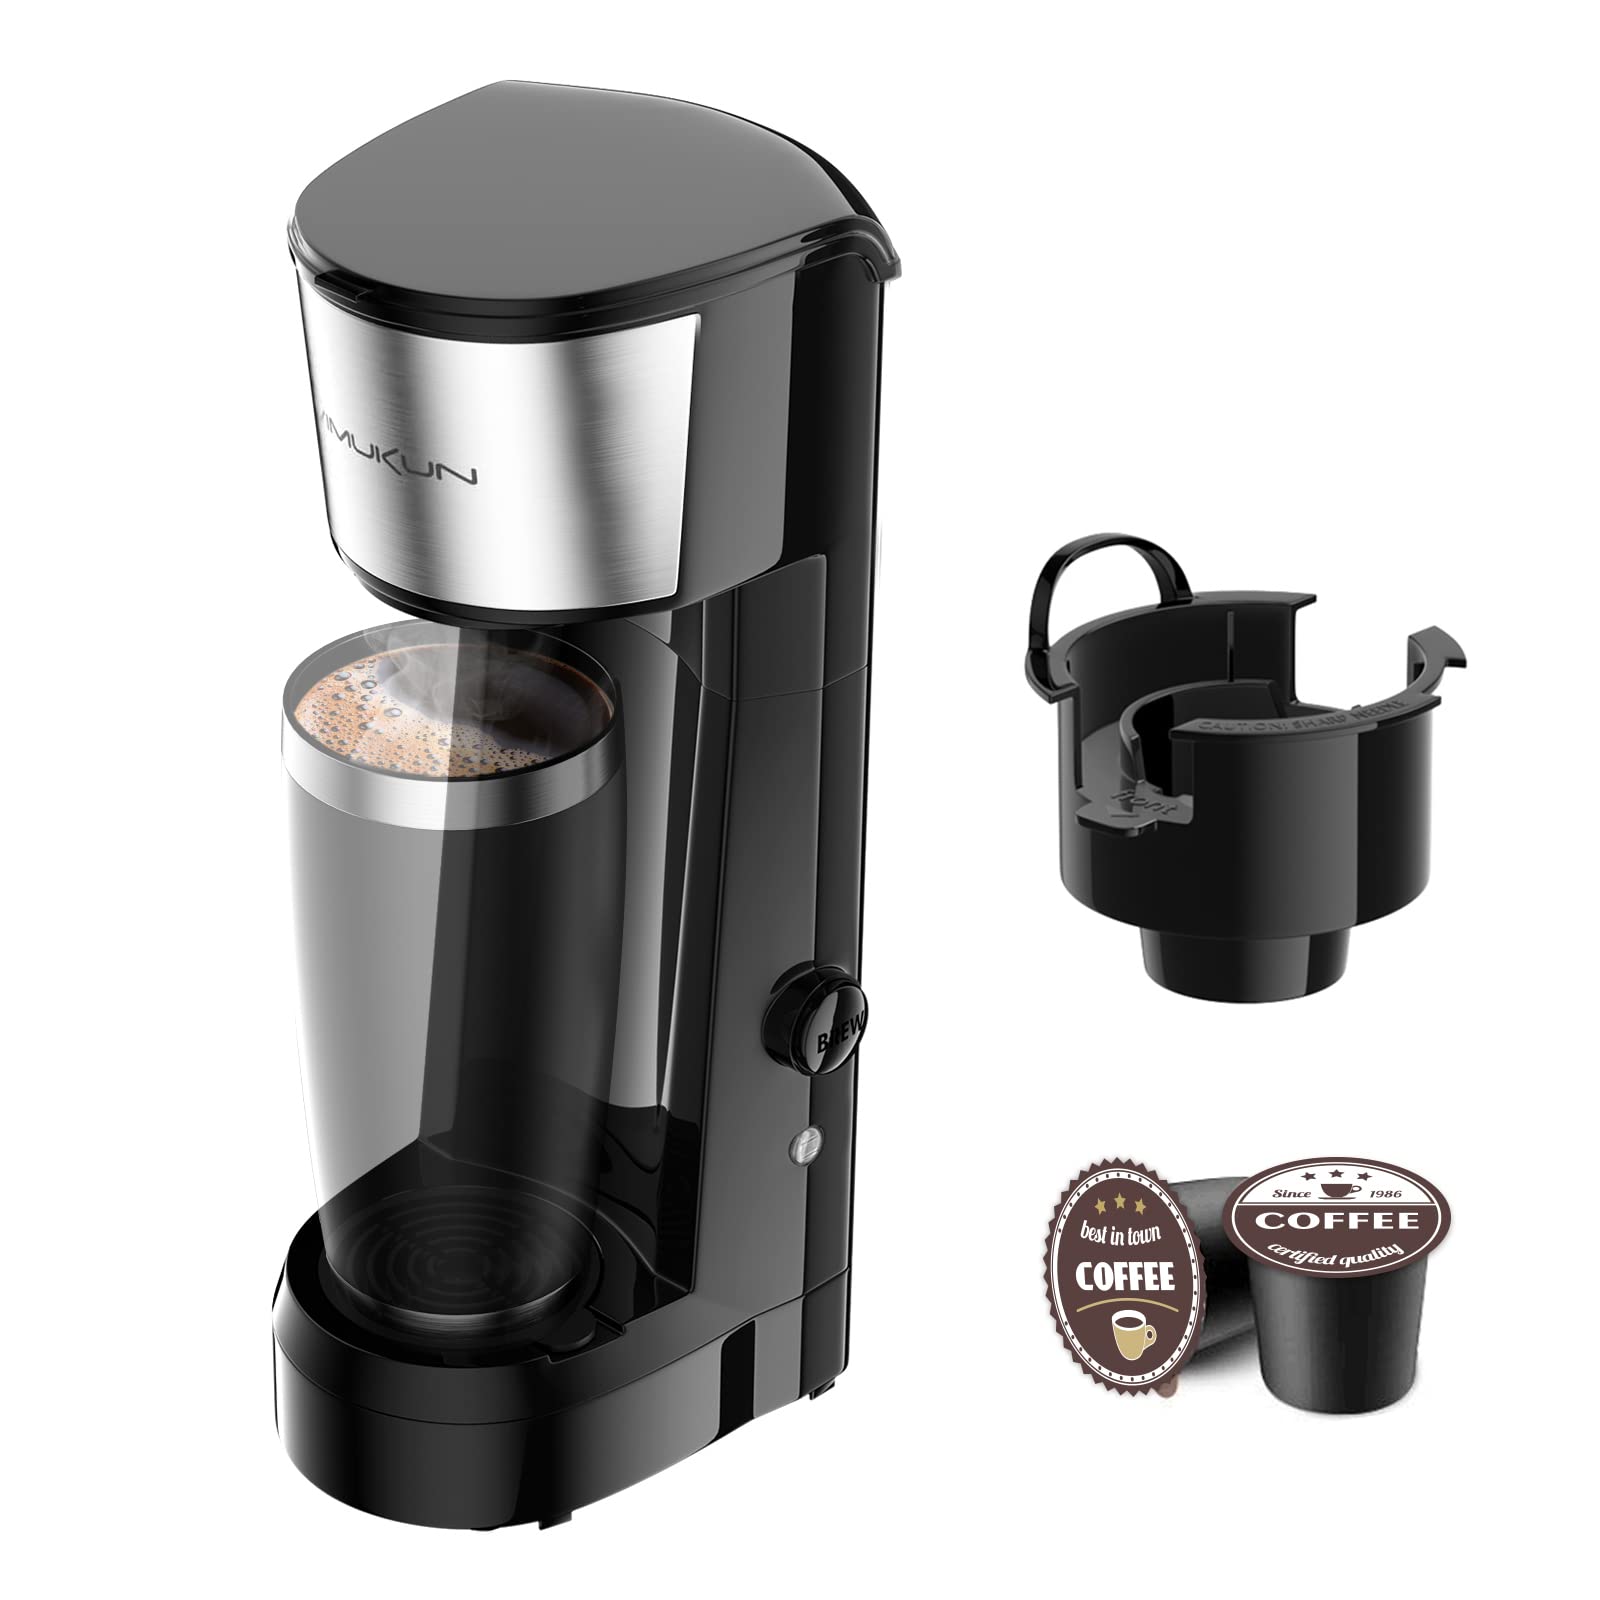 Chulux Single Serve Coffee Maker Capsule Coffee - Temu